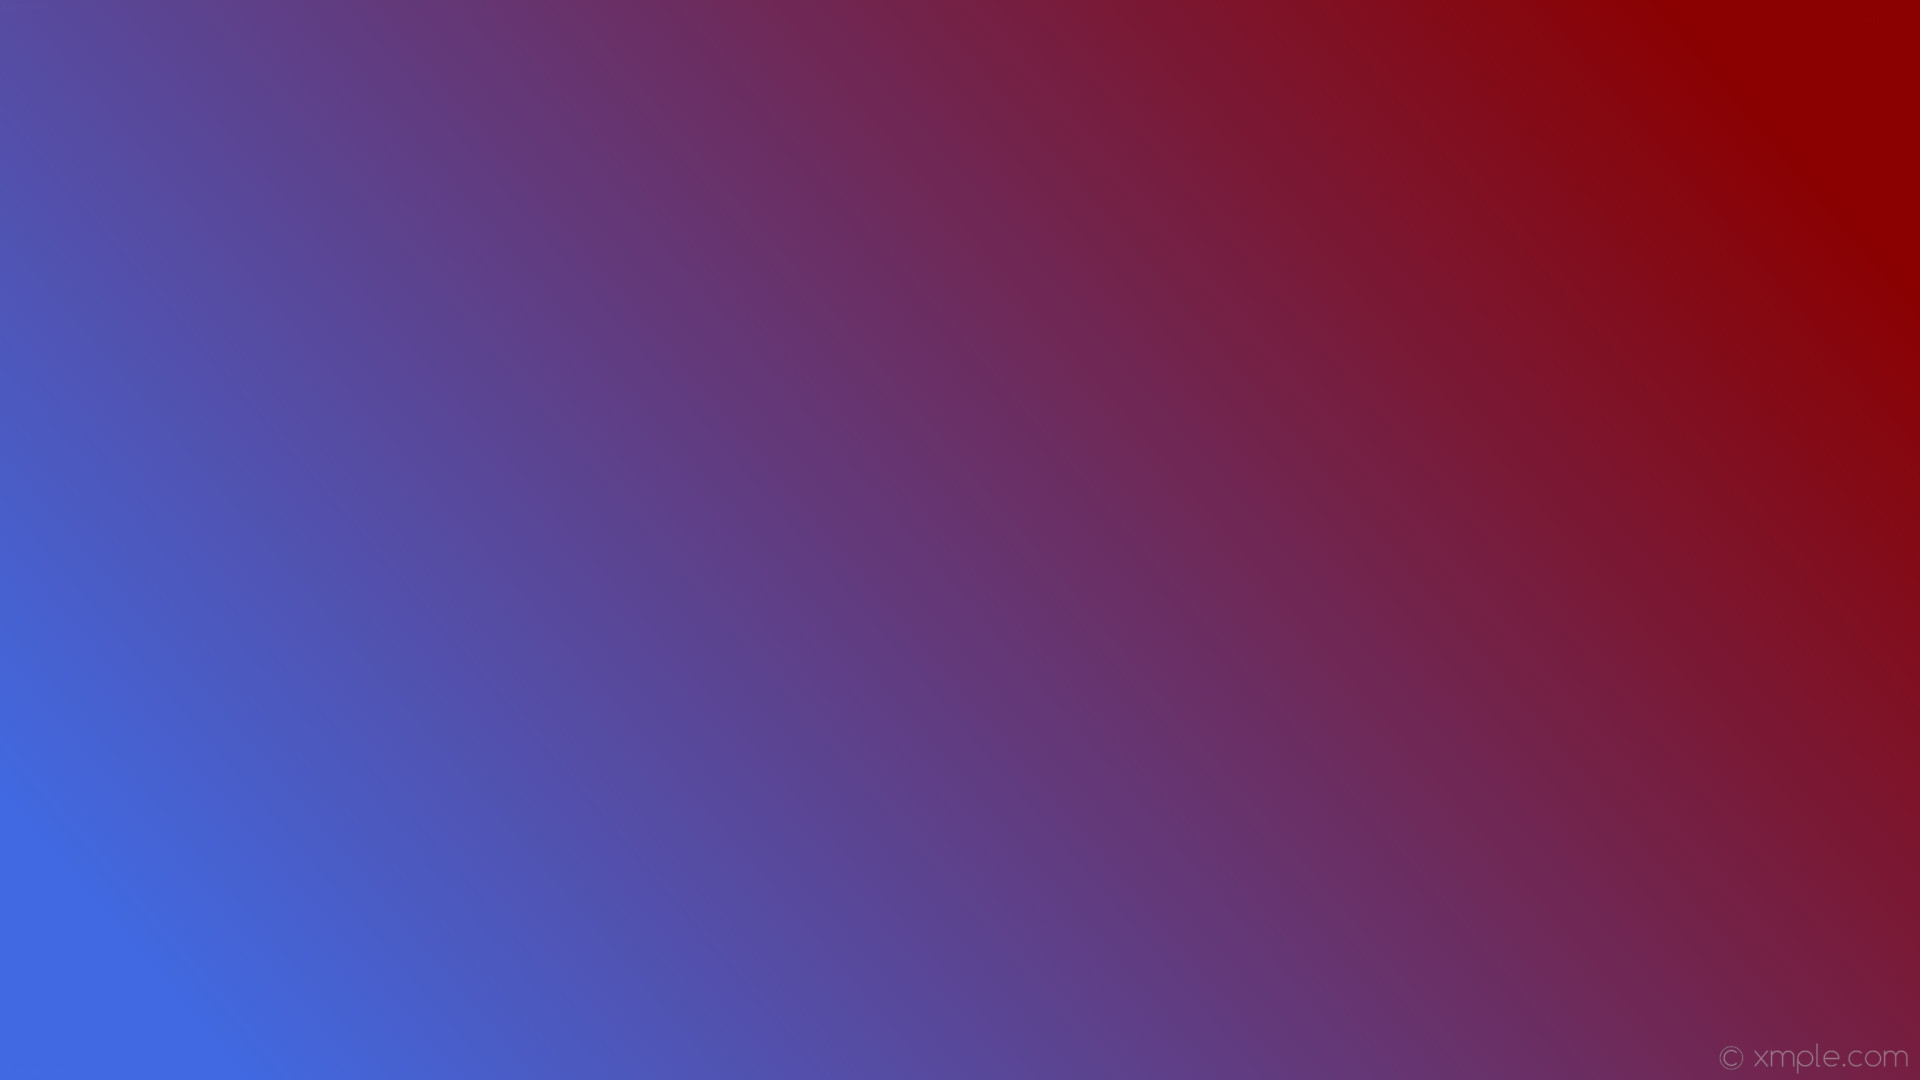 1920x1080 wallpaper gradient linear red blue dark red royal blue #8b0000 #4169e1 15Â°